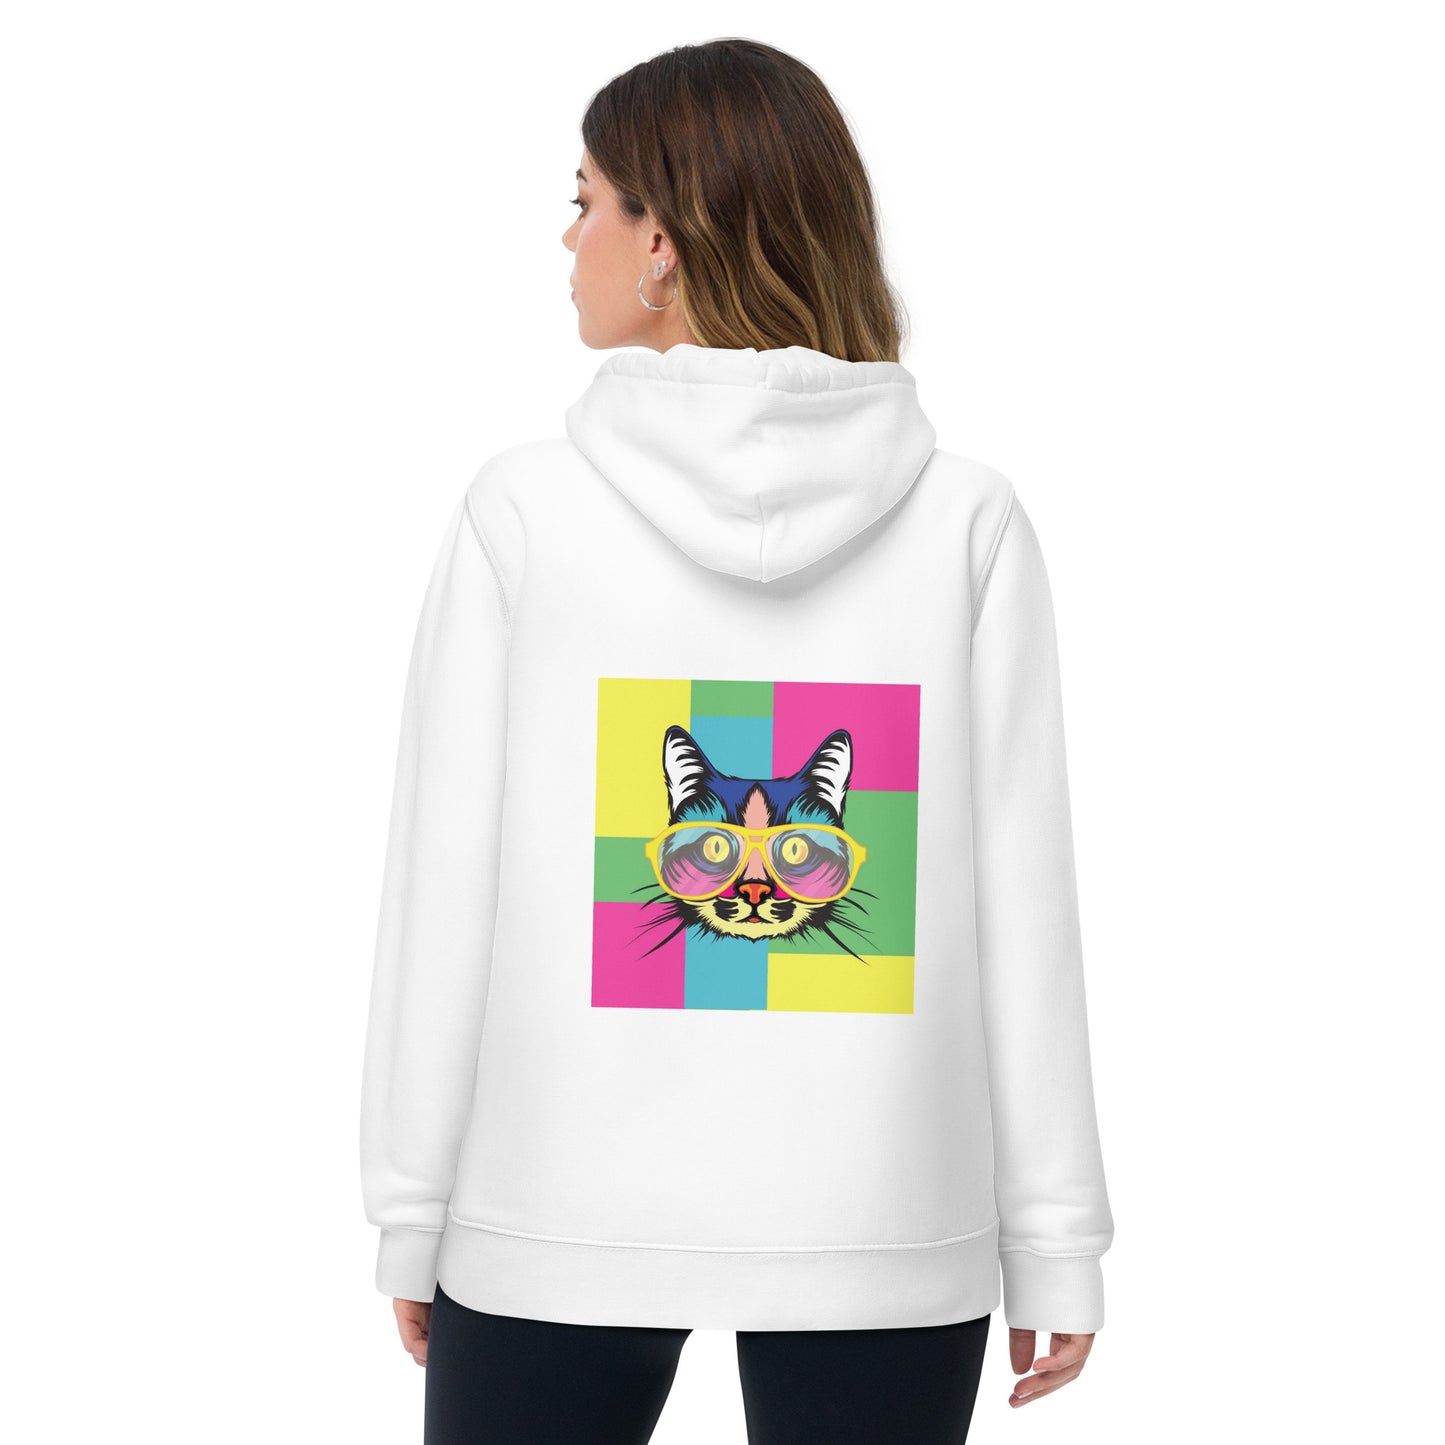 Unisex essential eco hoodie with Pop art design, by Vecteezy.com